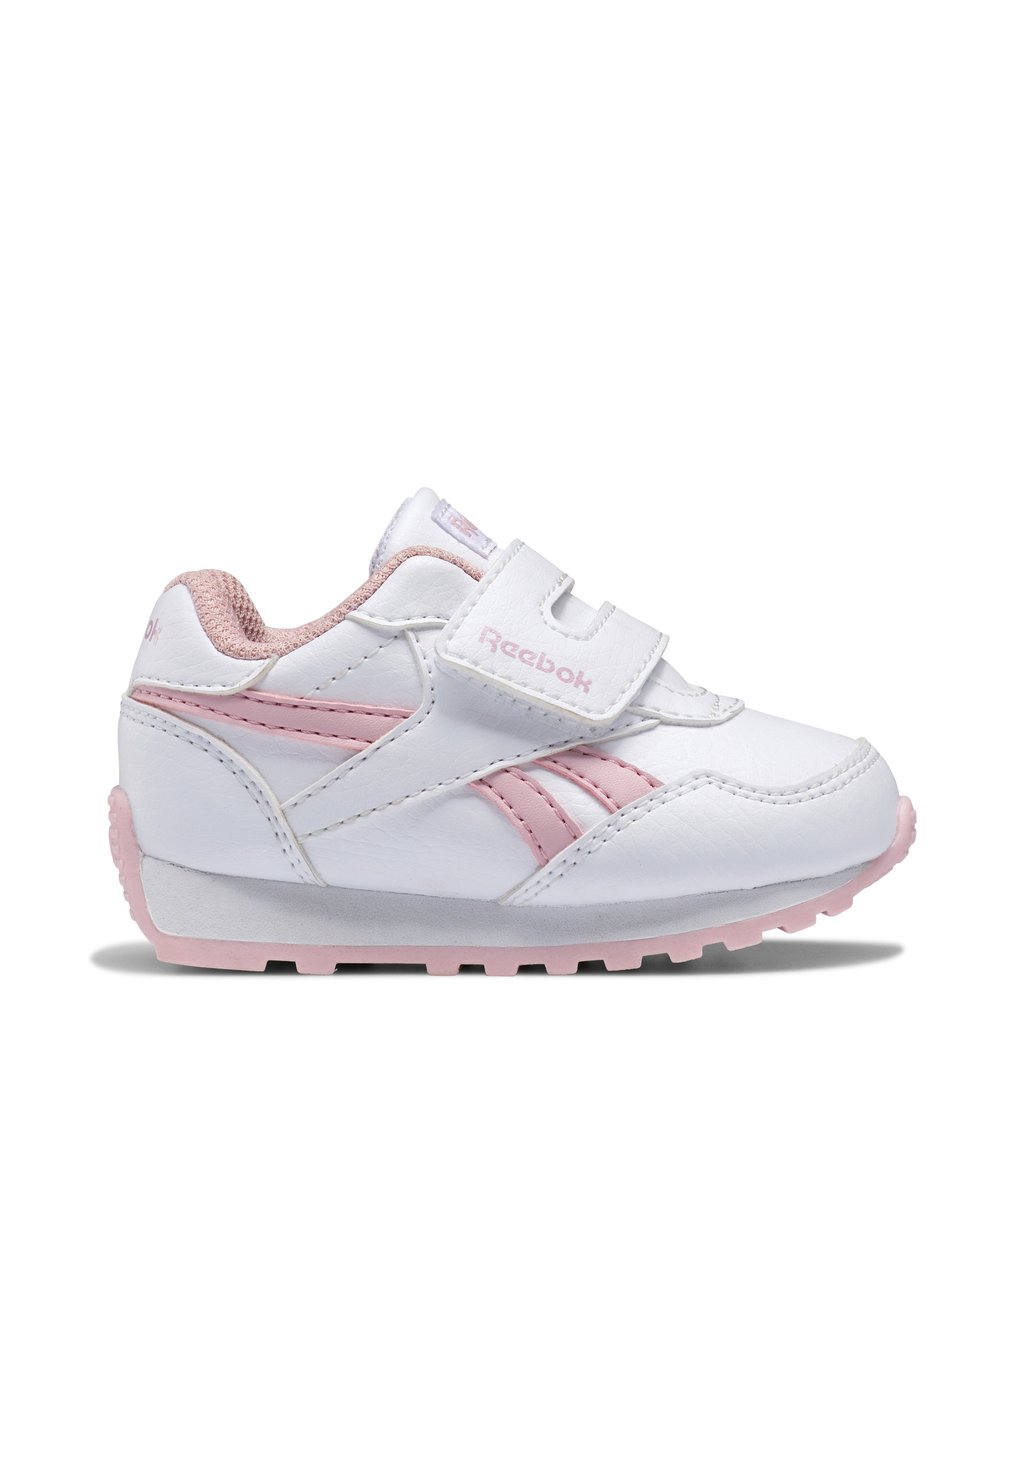 Обувь для ходьбы Non Football Royal Rewind Reebok, цвет cloud white classic pink cloud white цена и фото